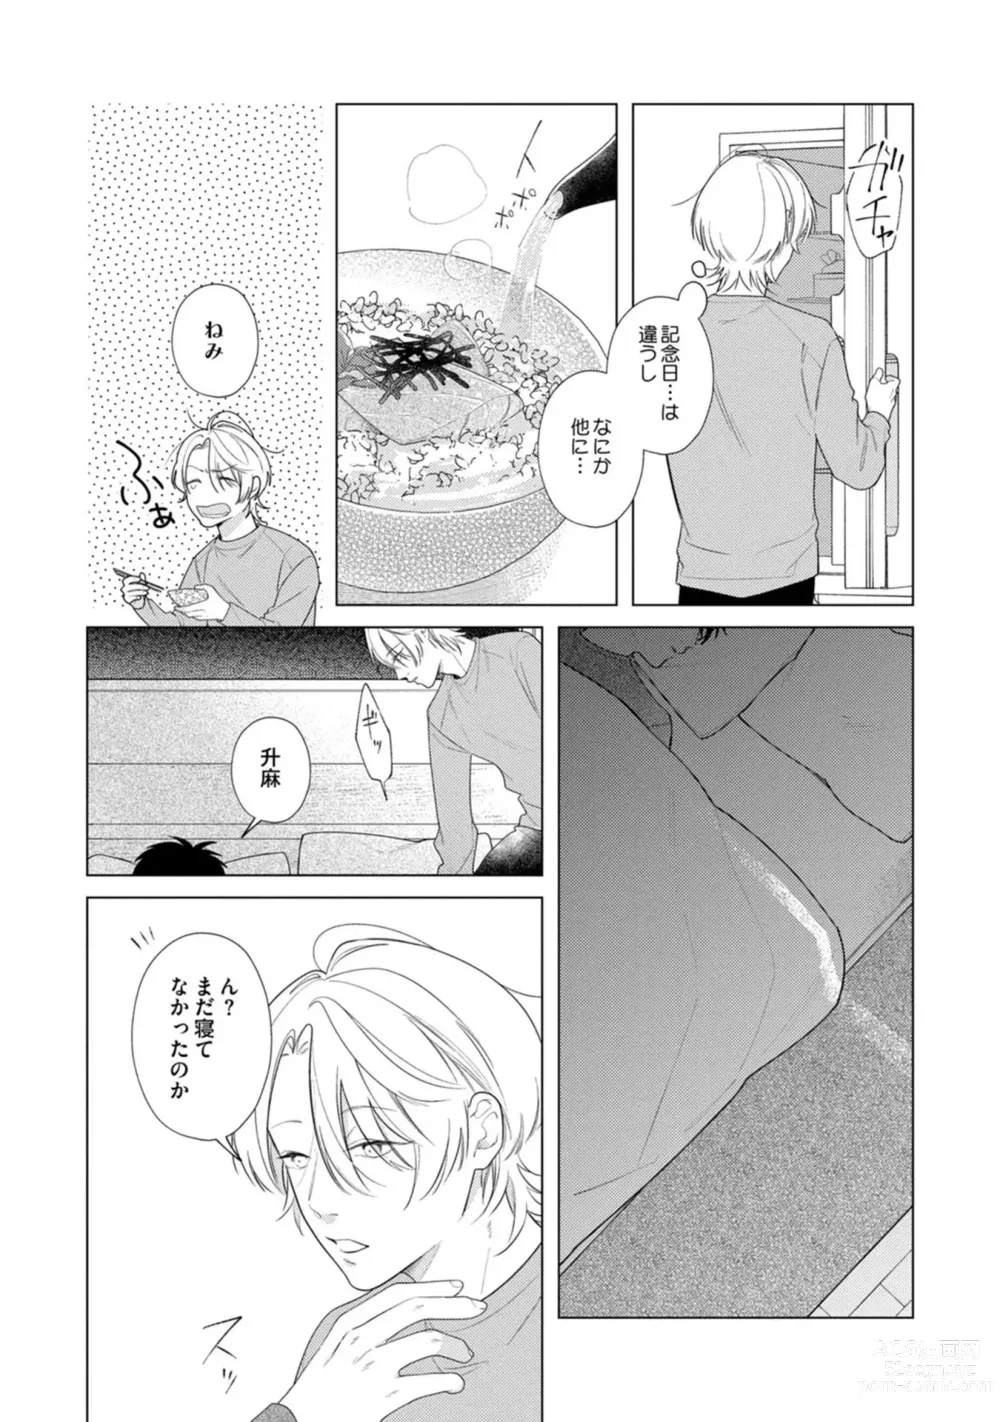 Page 10 of manga Yoru mo, Asa mo